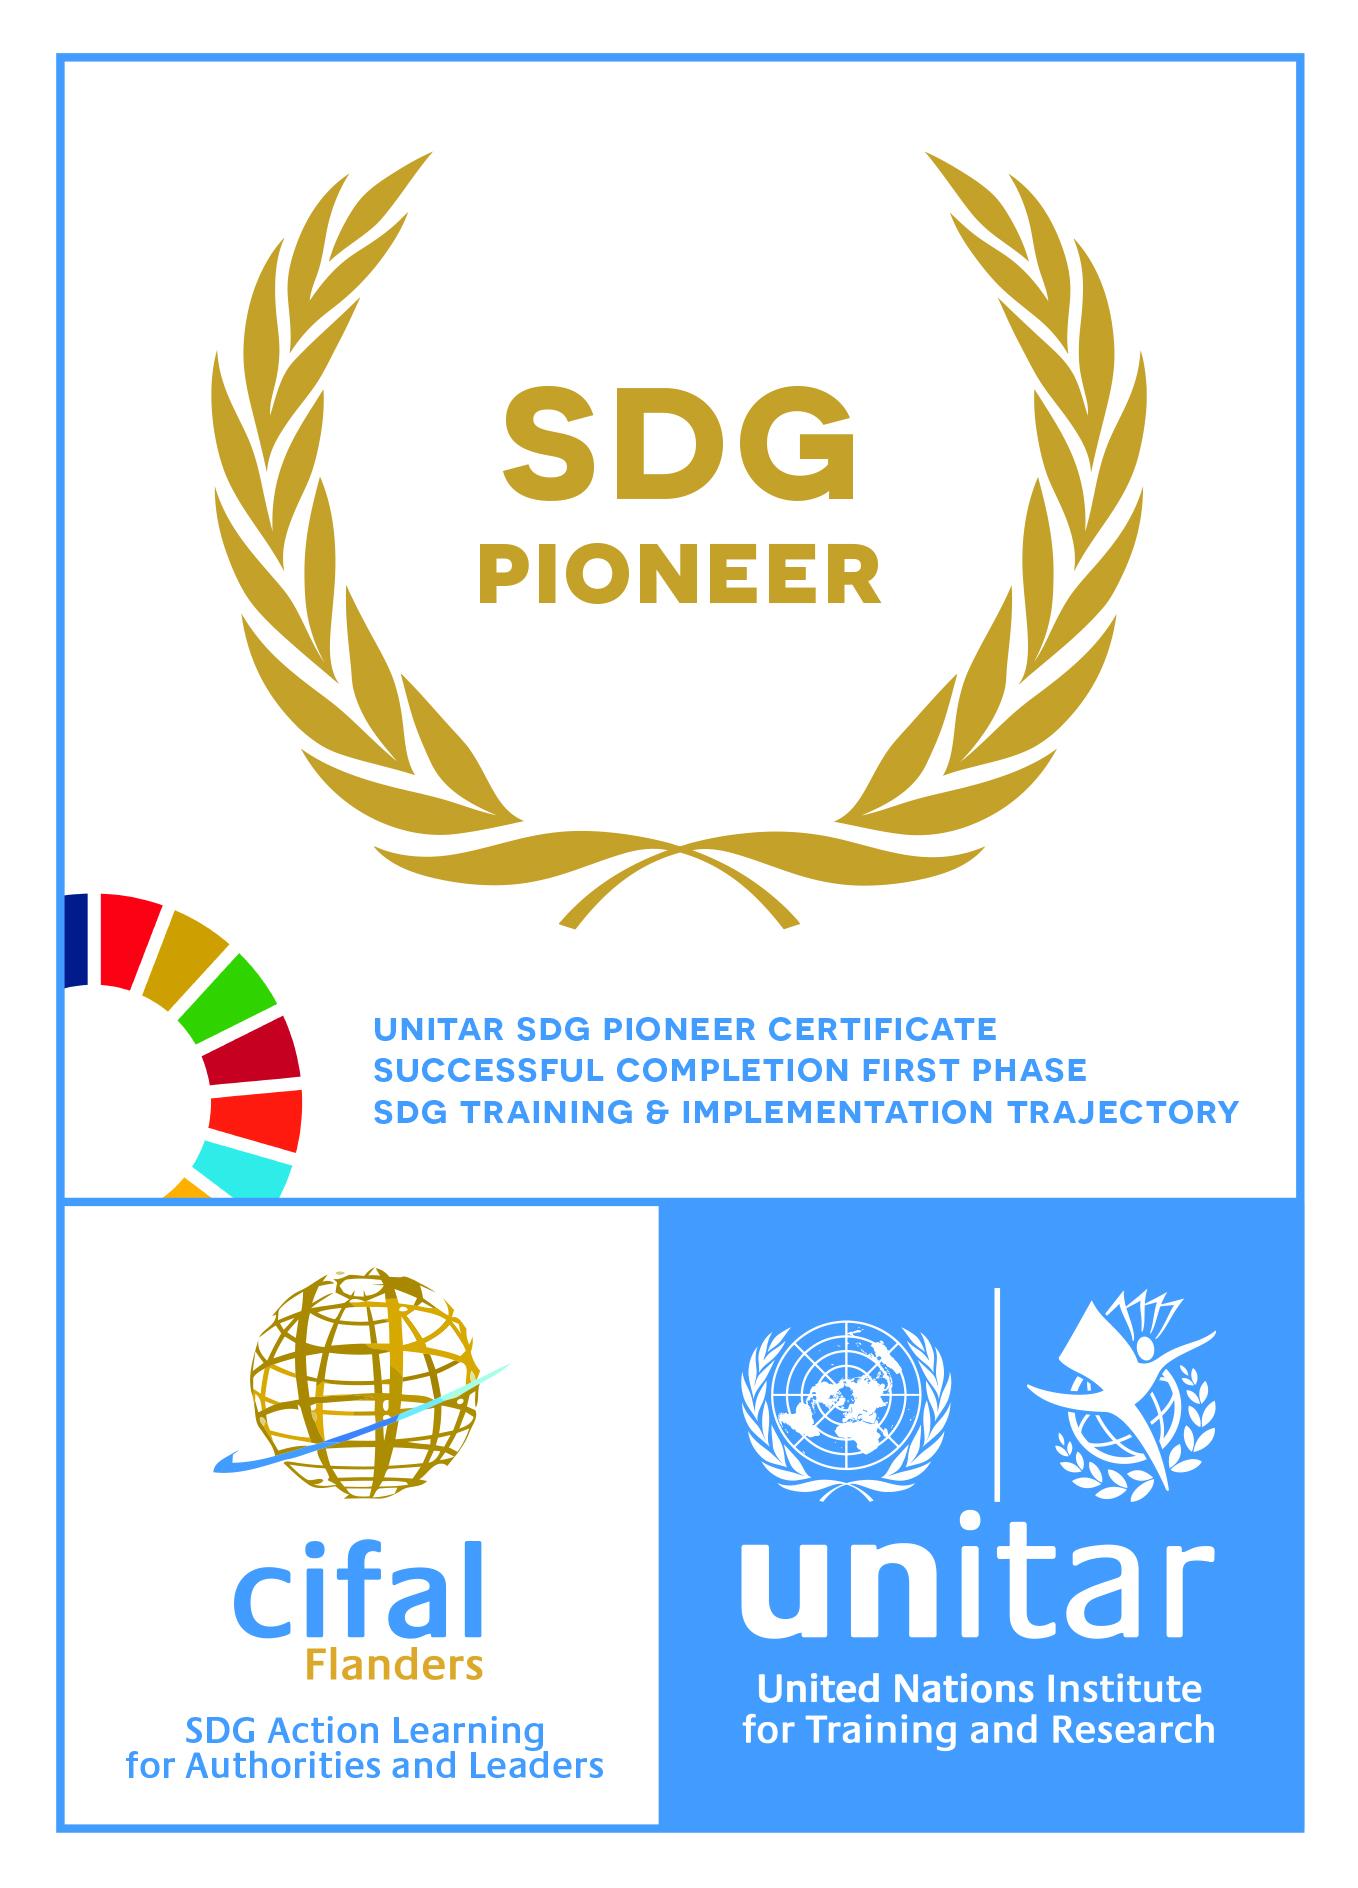 UNITAR SDG Pioneer Award